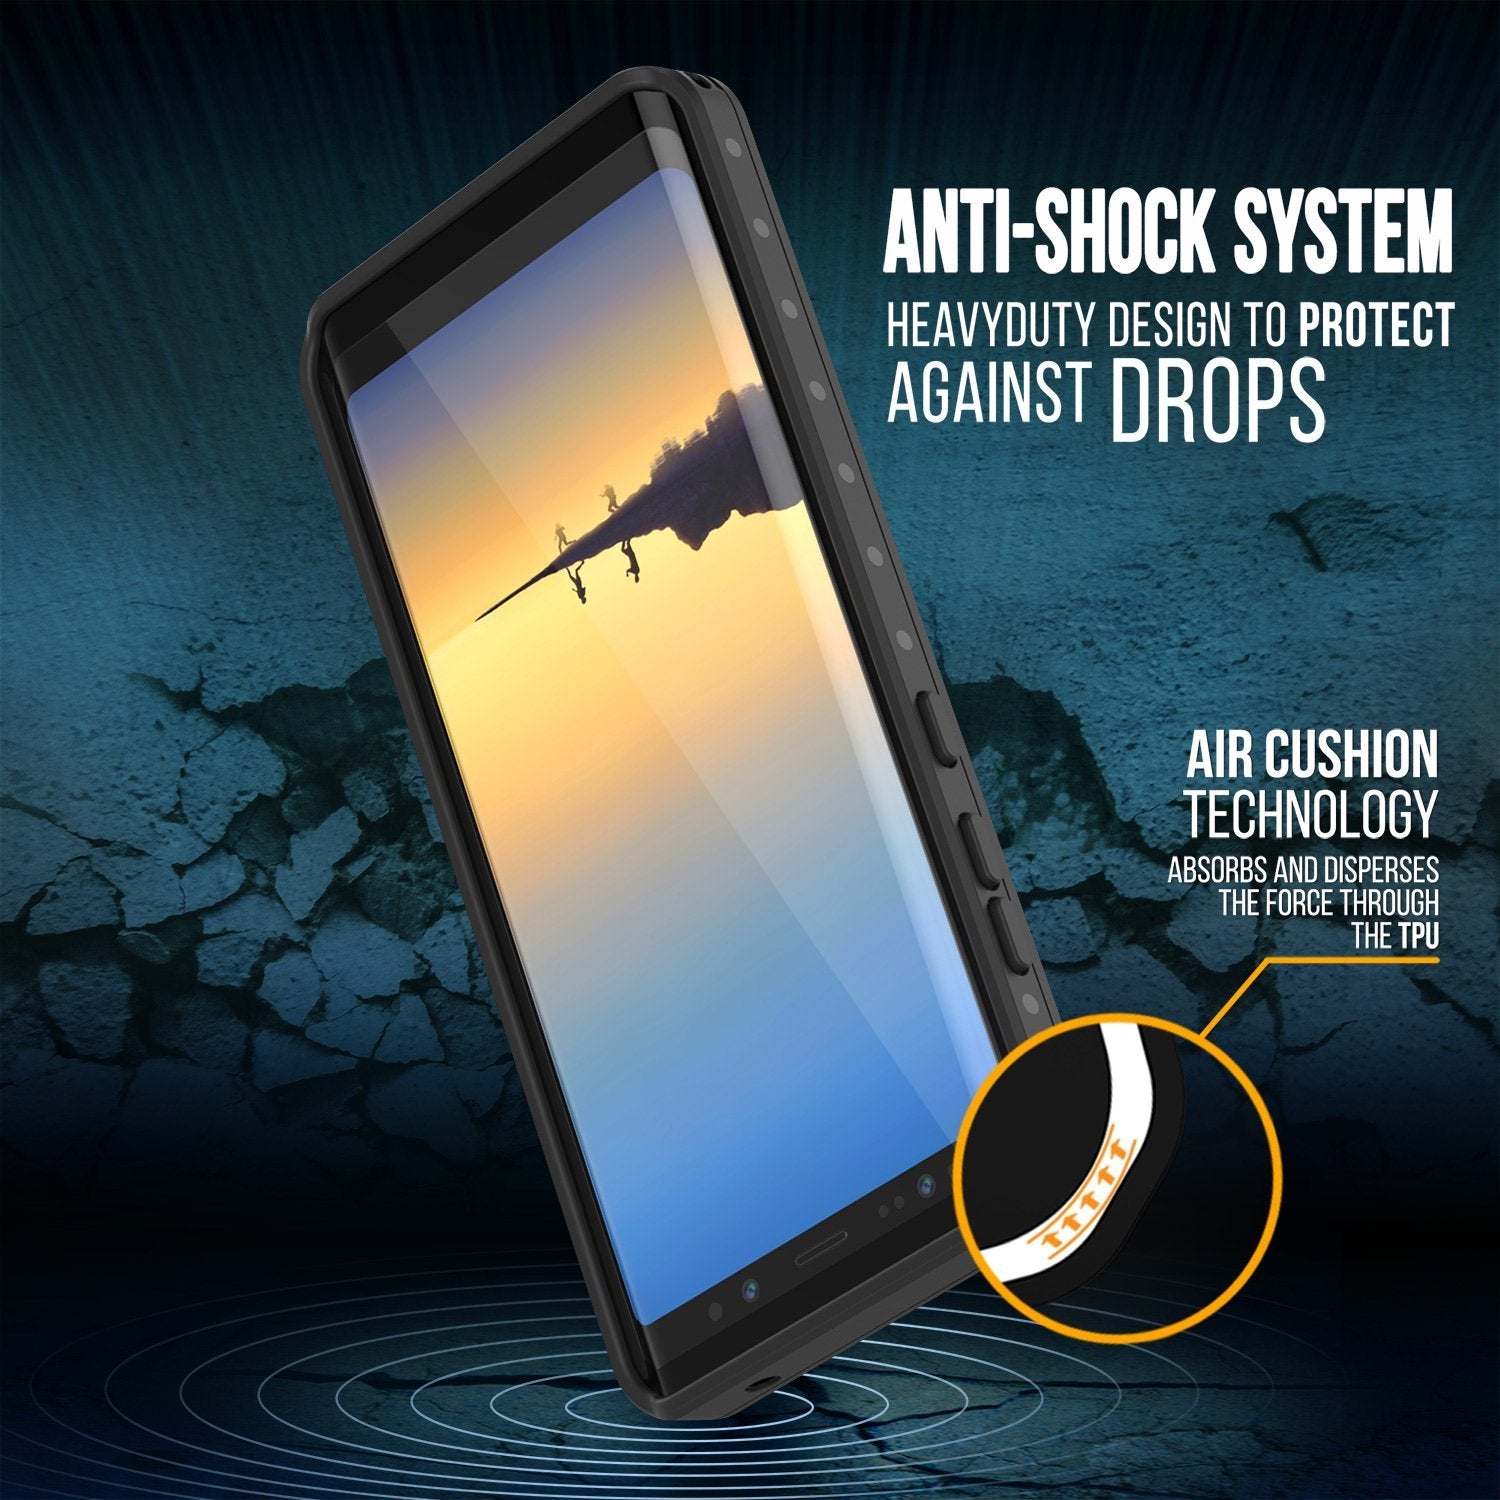 Galaxy Note 8 Waterproof Punkcase, StudStar Series Armor Cover [BLACK]